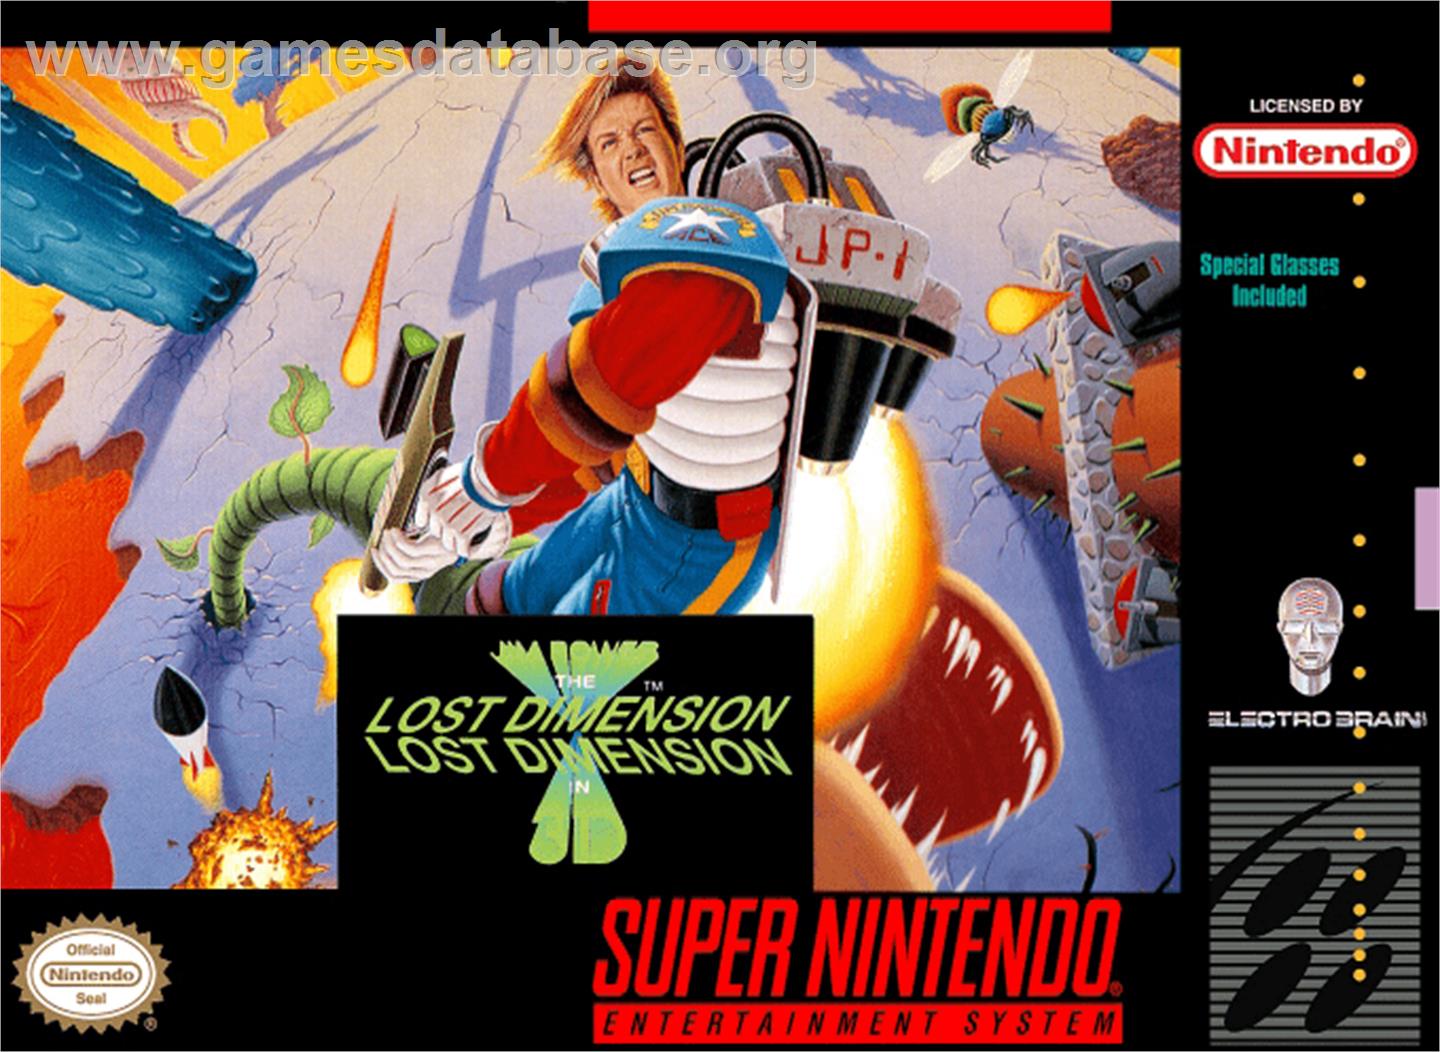 Jim Power: The Lost Dimension in 3D - Nintendo SNES - Artwork - Box